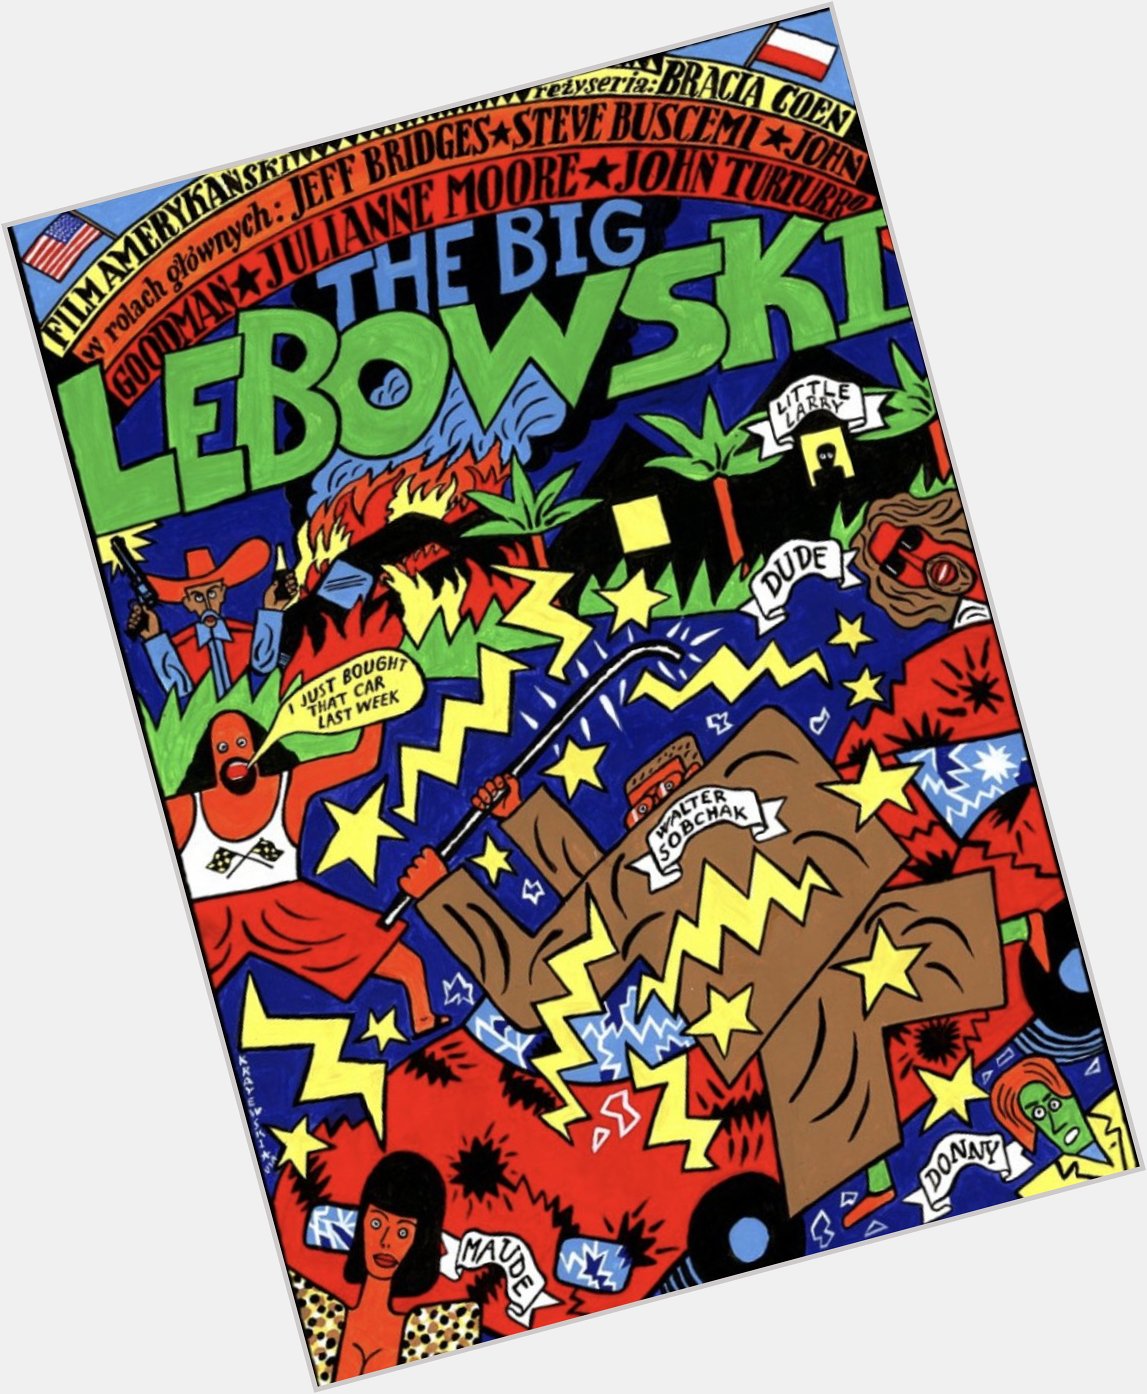 Happy Birthday to Jeff Bridges - THE BIG LEBOWSKI - 1998 - Polish release poster 